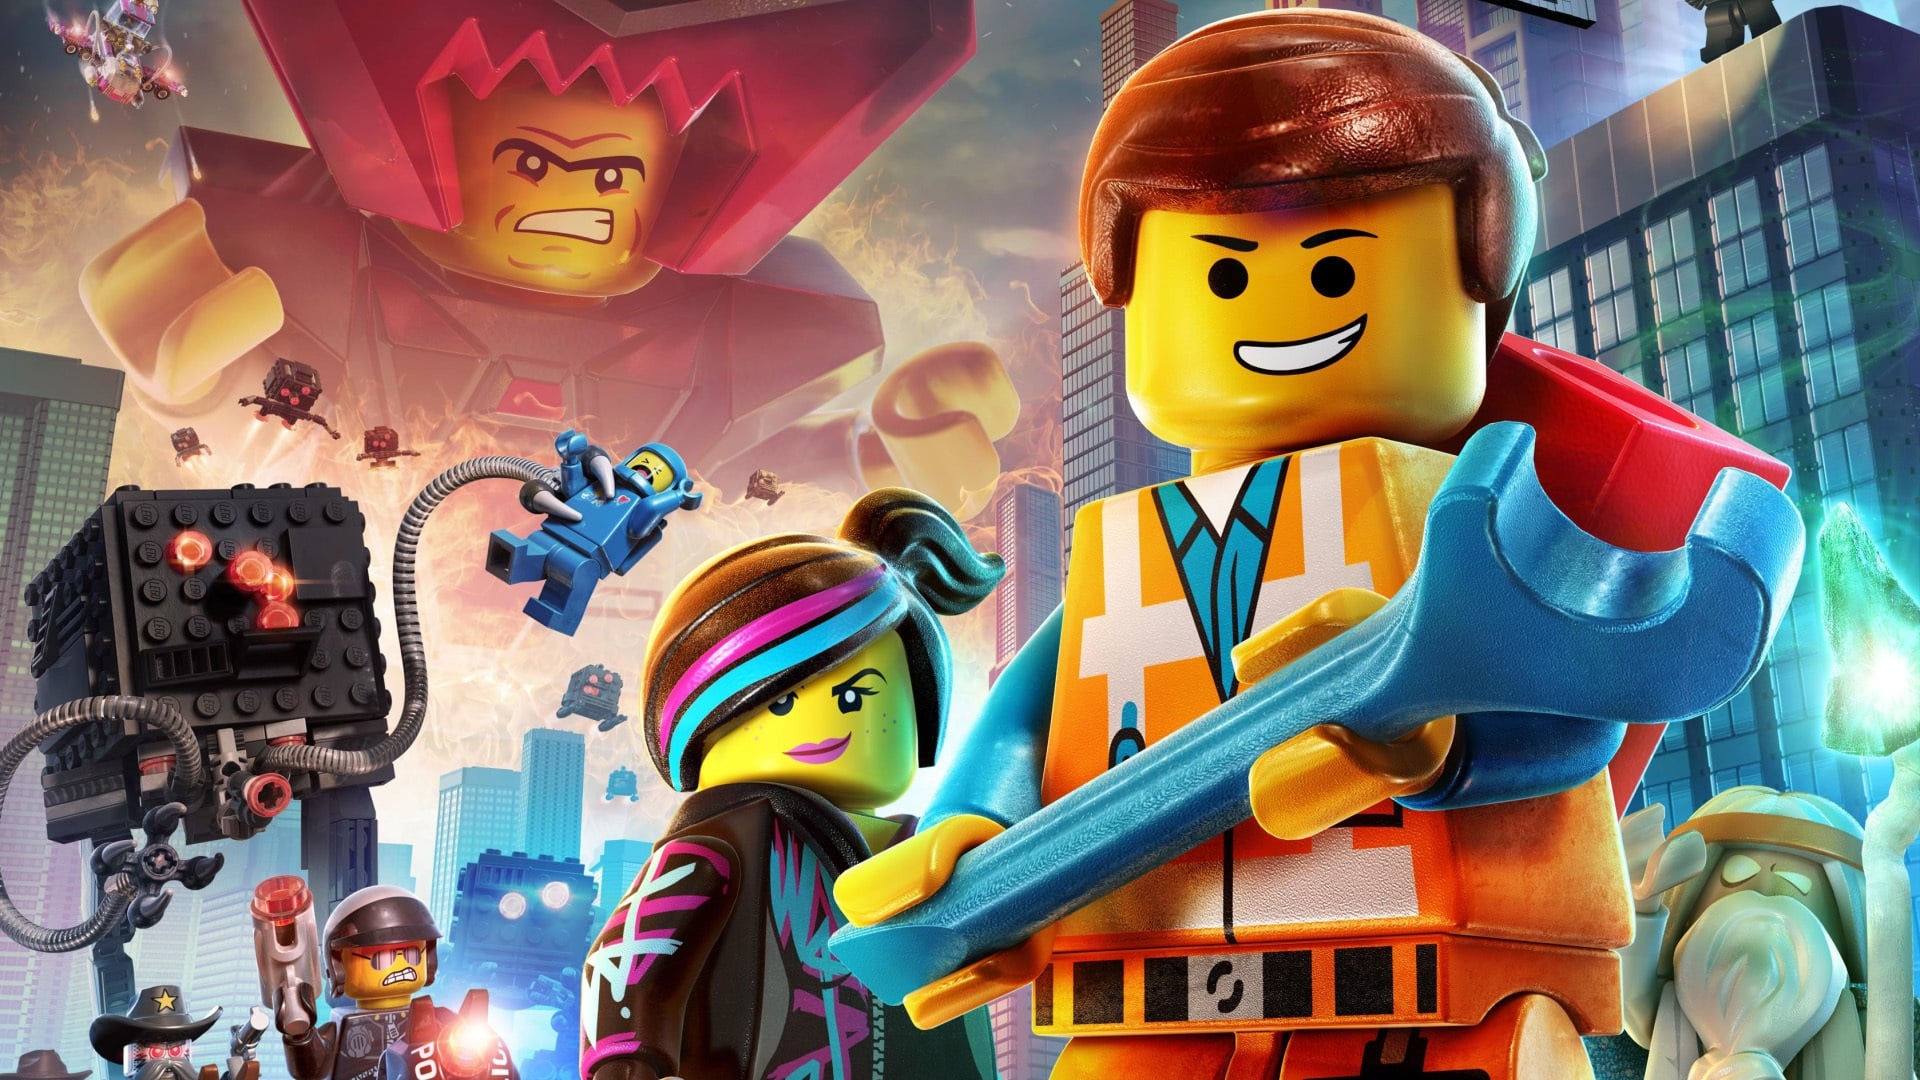 Poster Phim Câu Chuyện Lego (The Lego Movie)